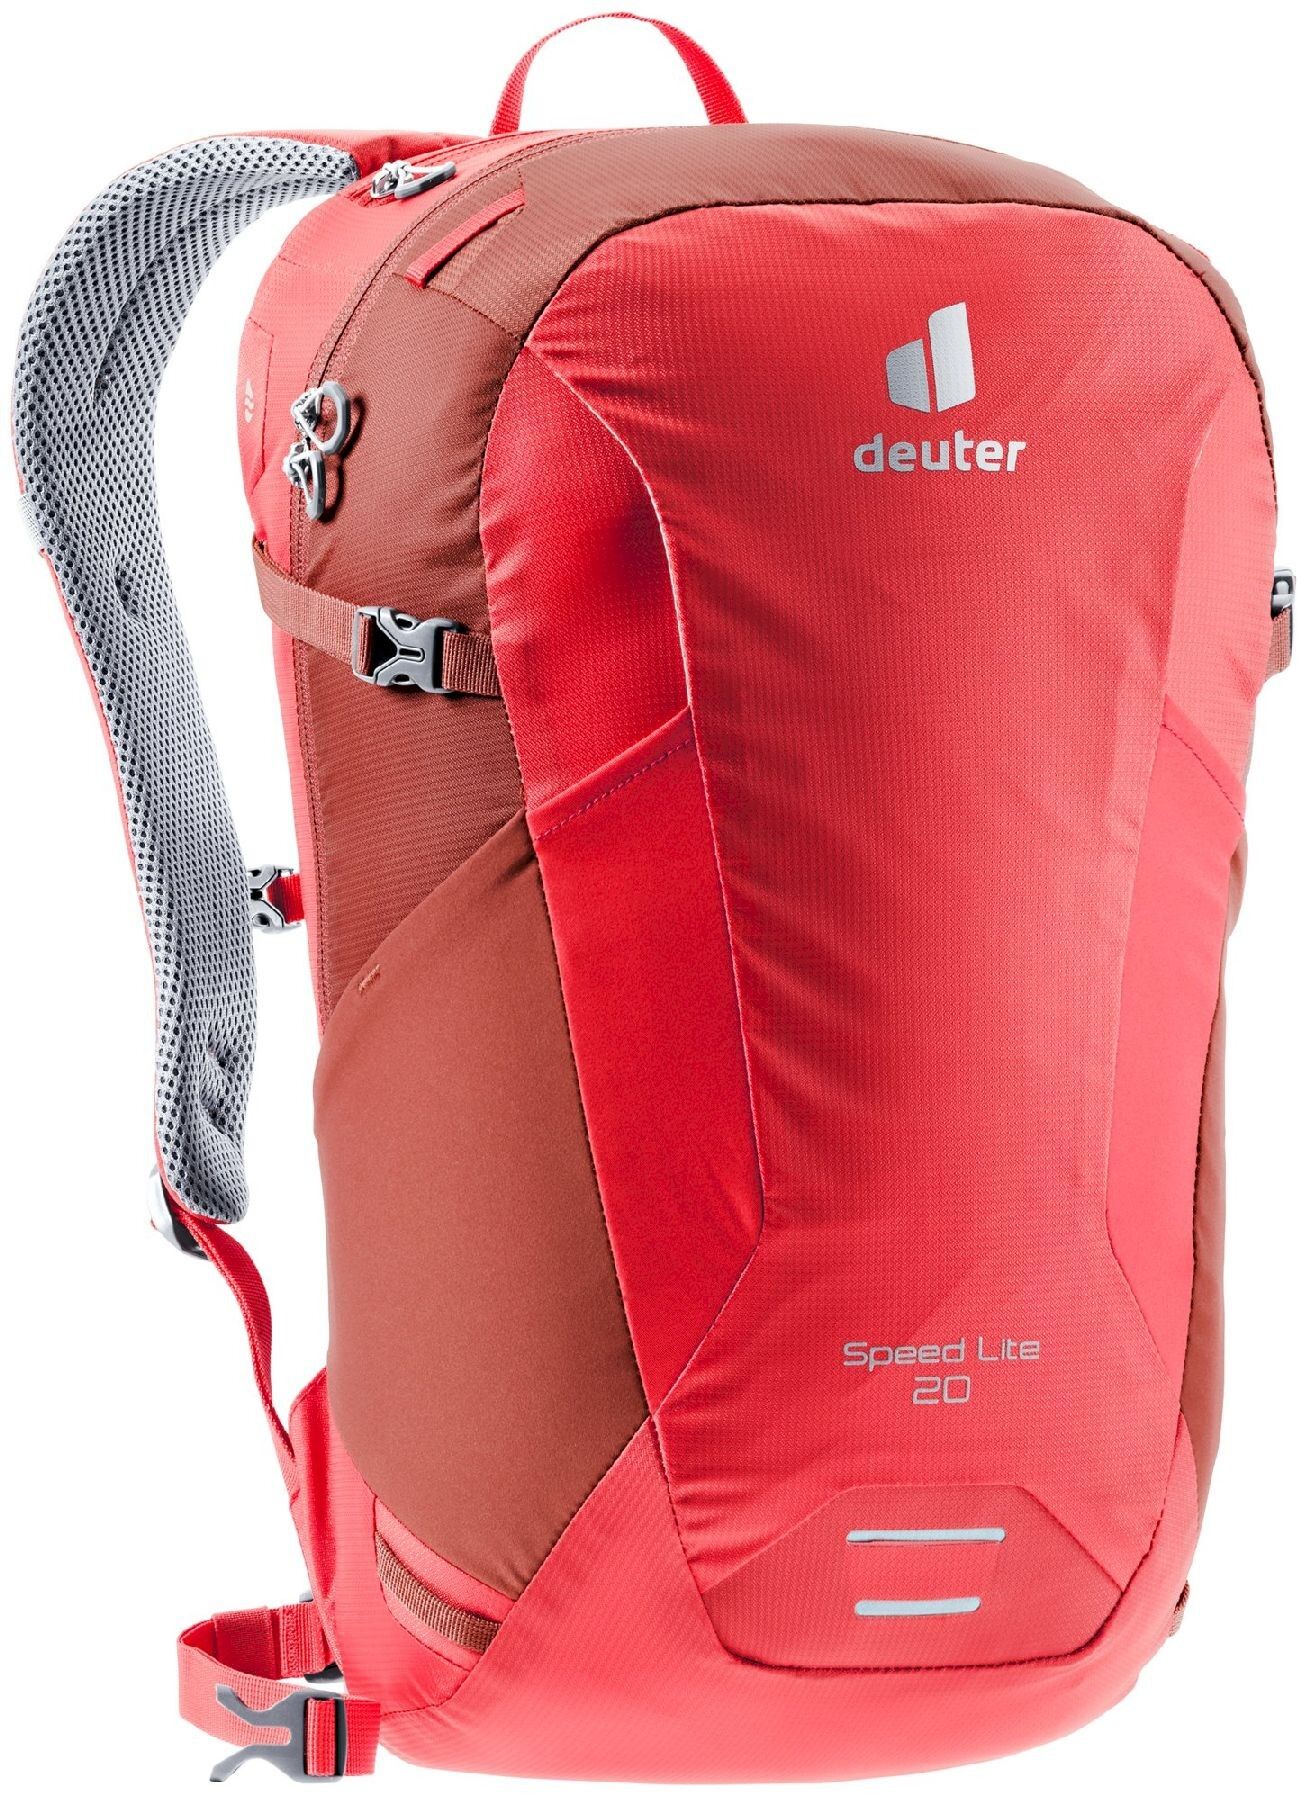 Deuter Speed Lite 20 - Walking backpack - Men's